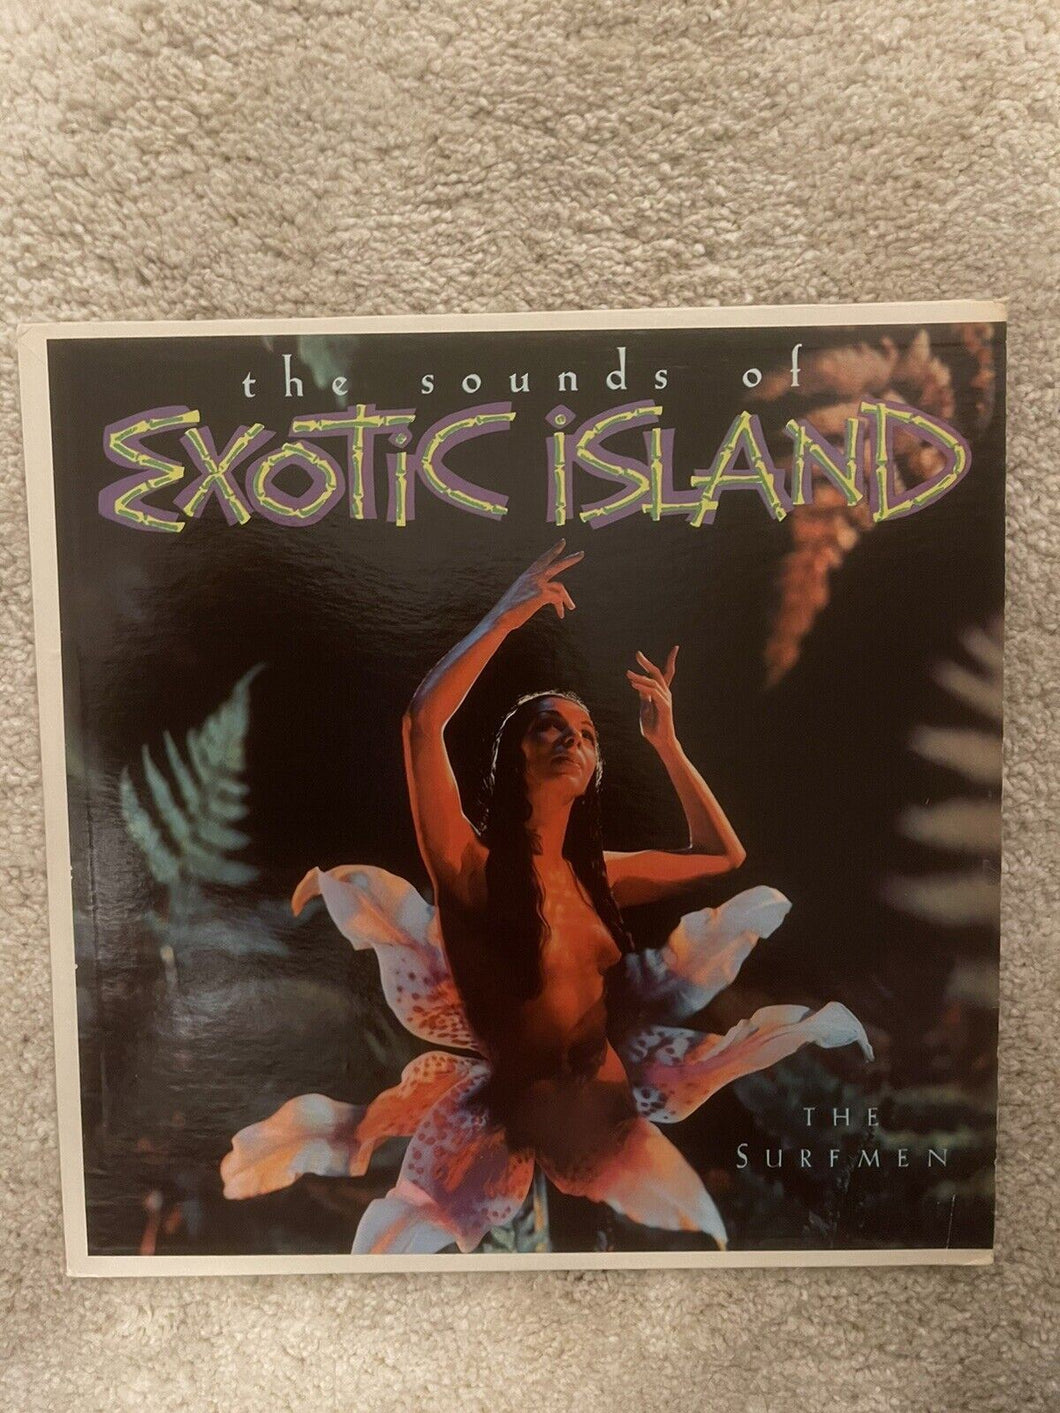 The Sounds of Exotic Island 1960 US Press Record vinyl album record